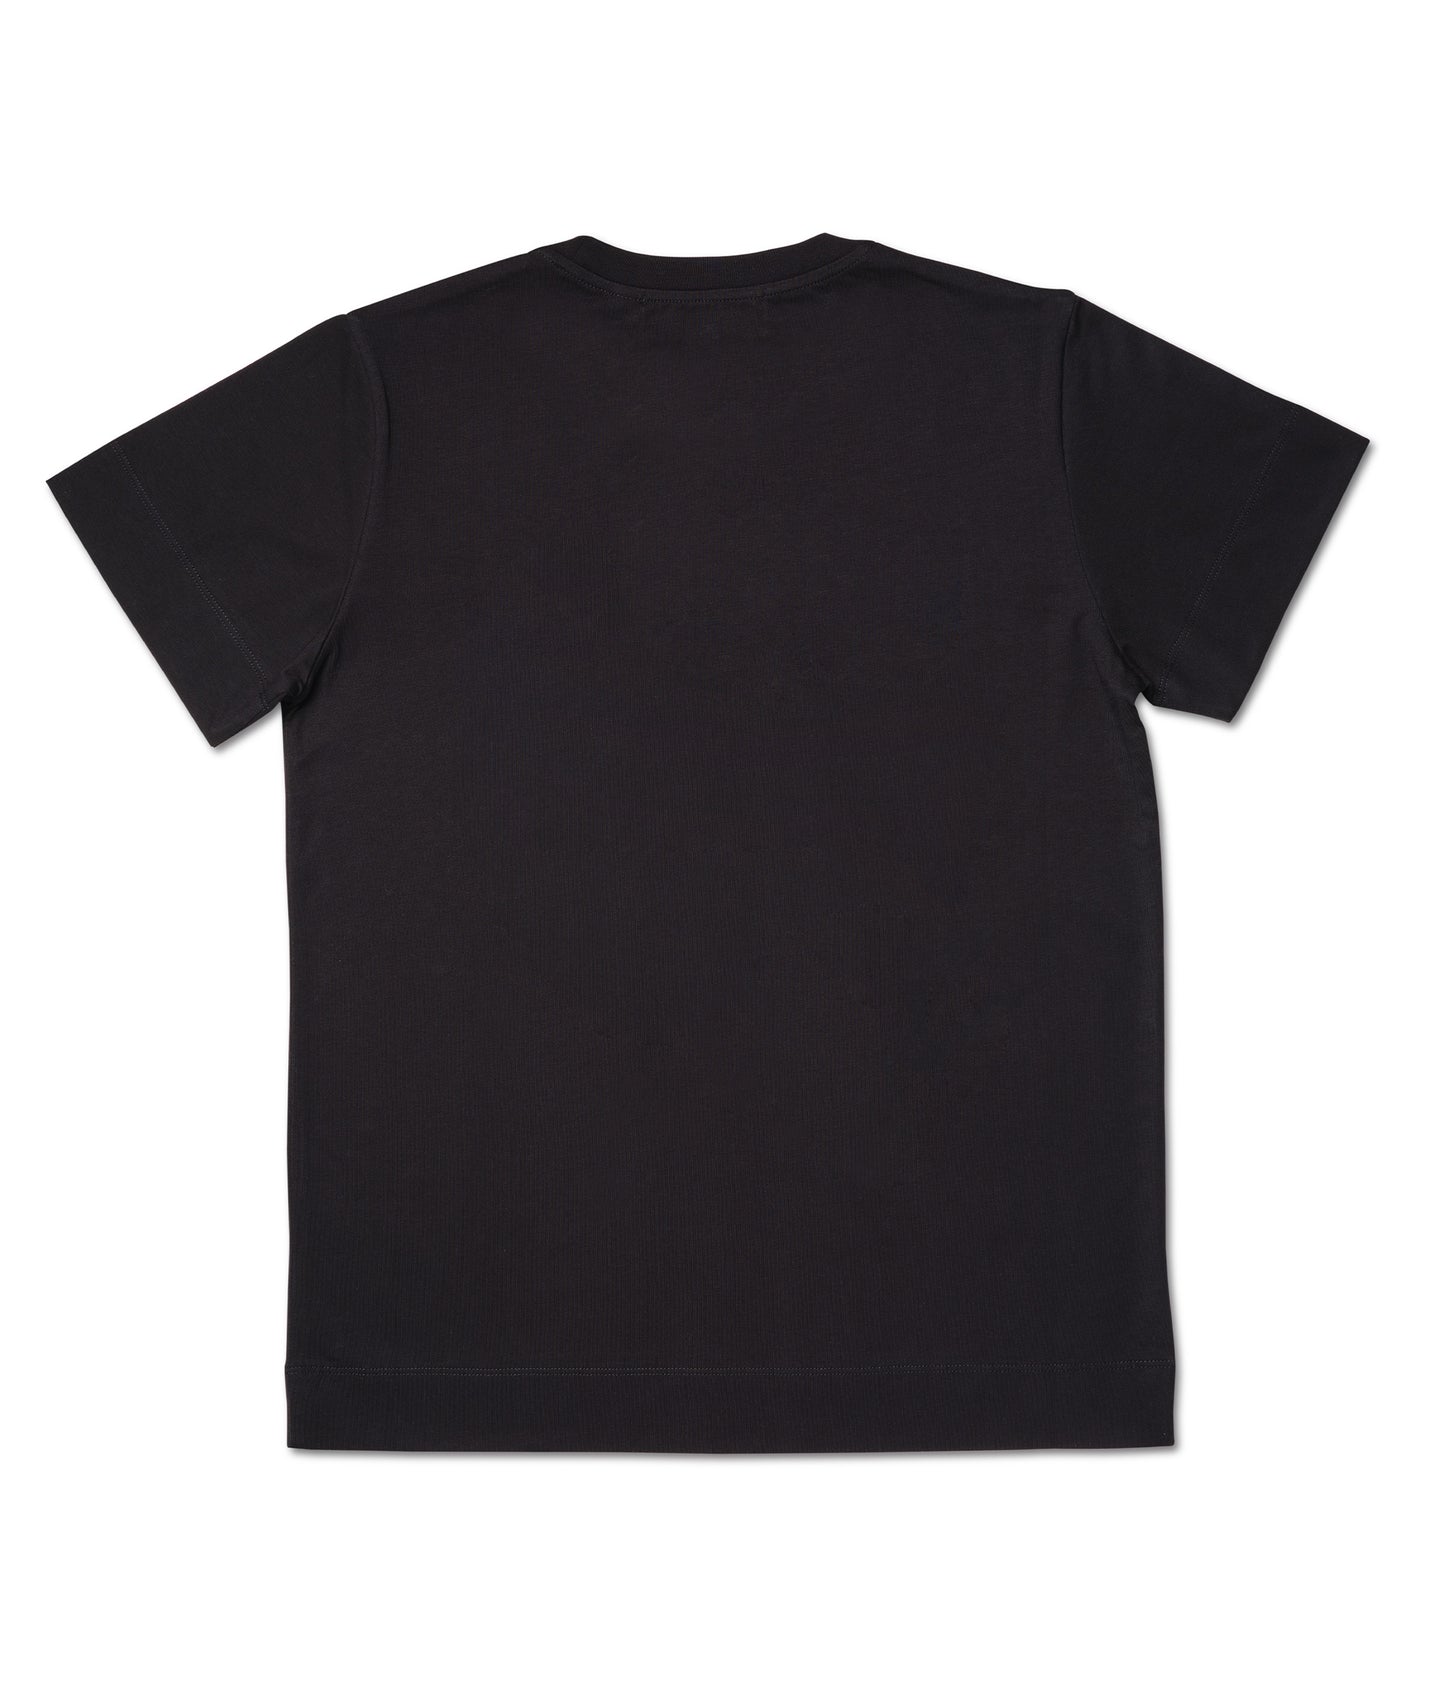 'Keep it Burning' Black T-Shirt Women